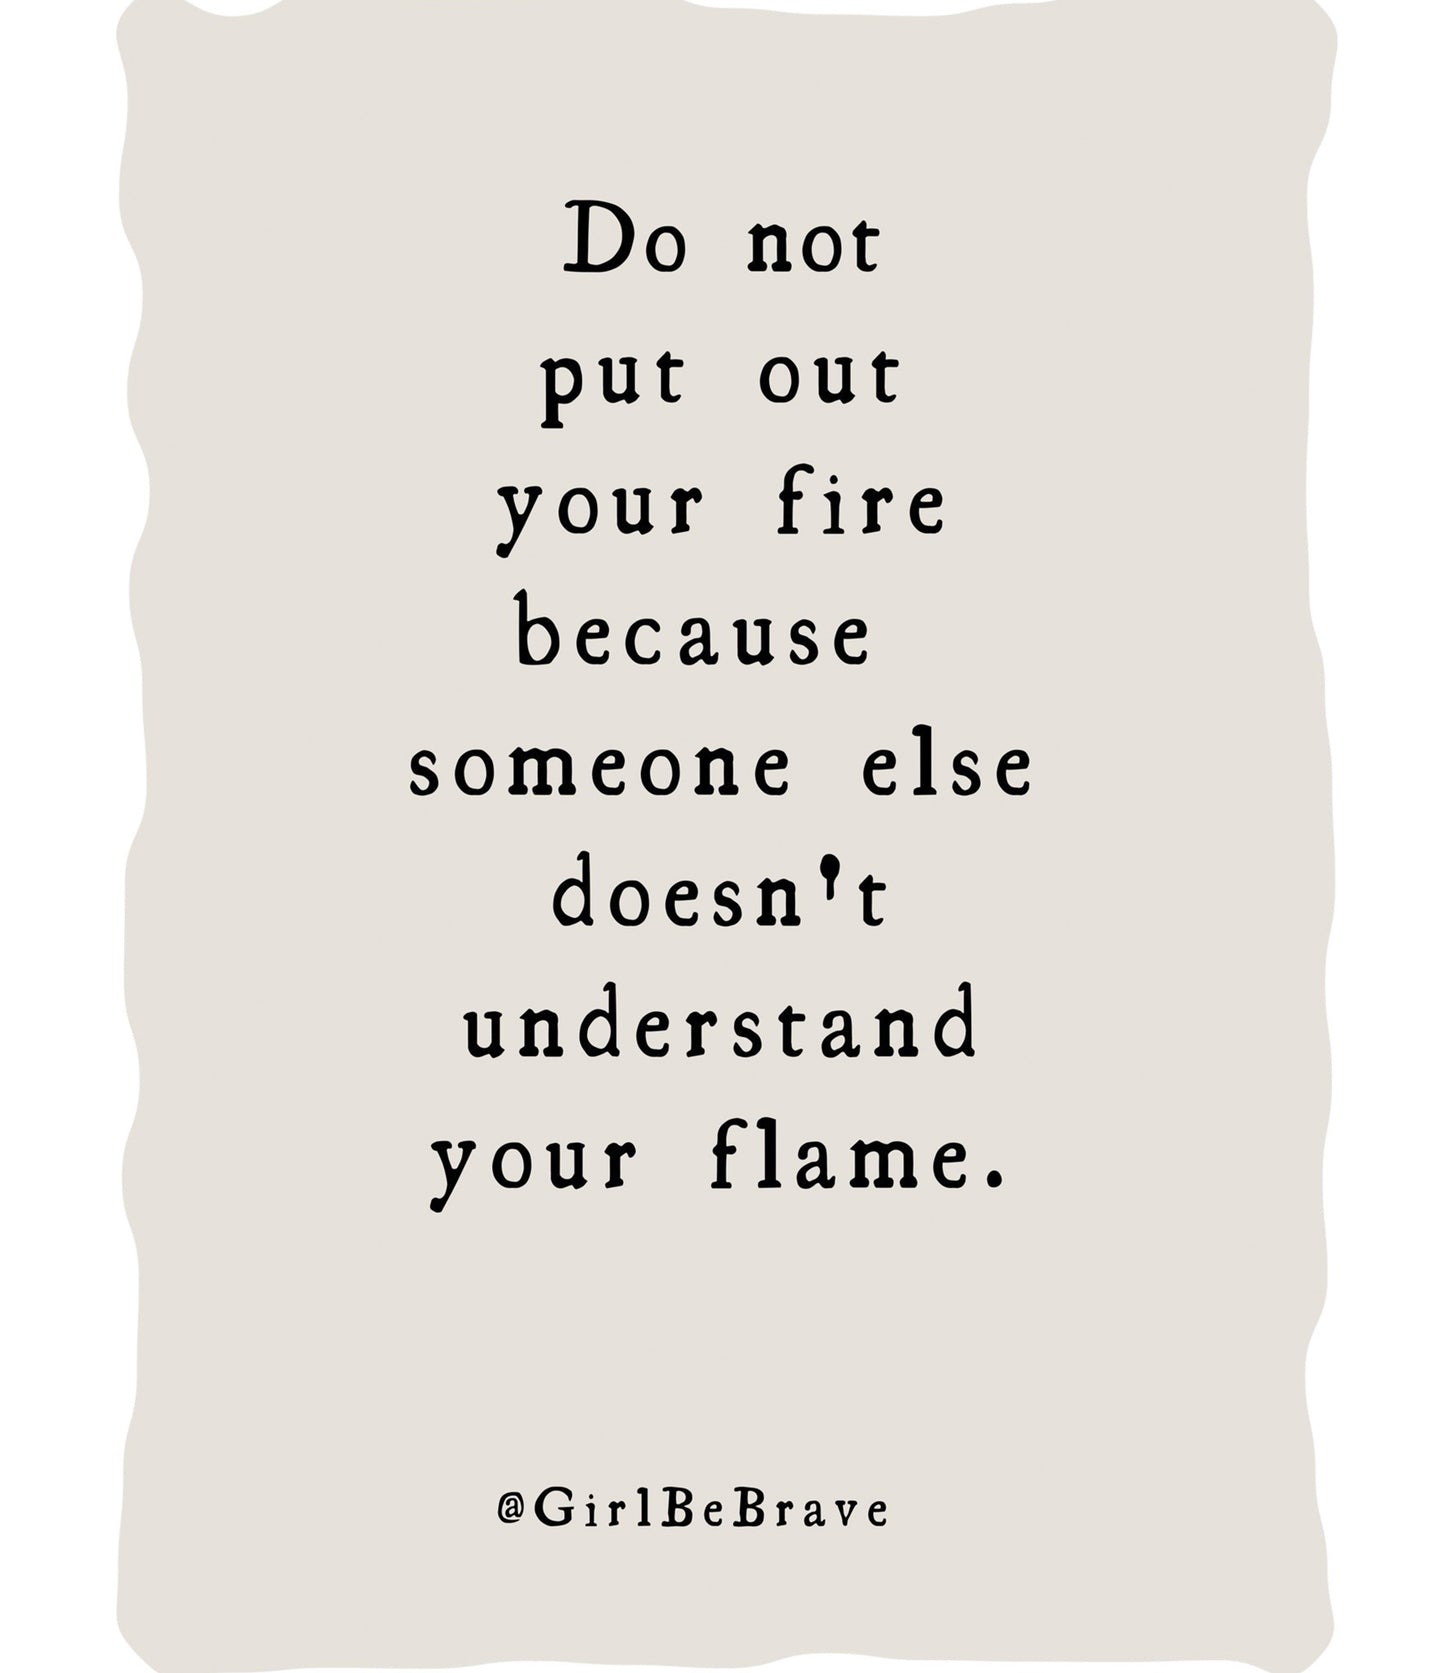 Girl Be Brave Poster